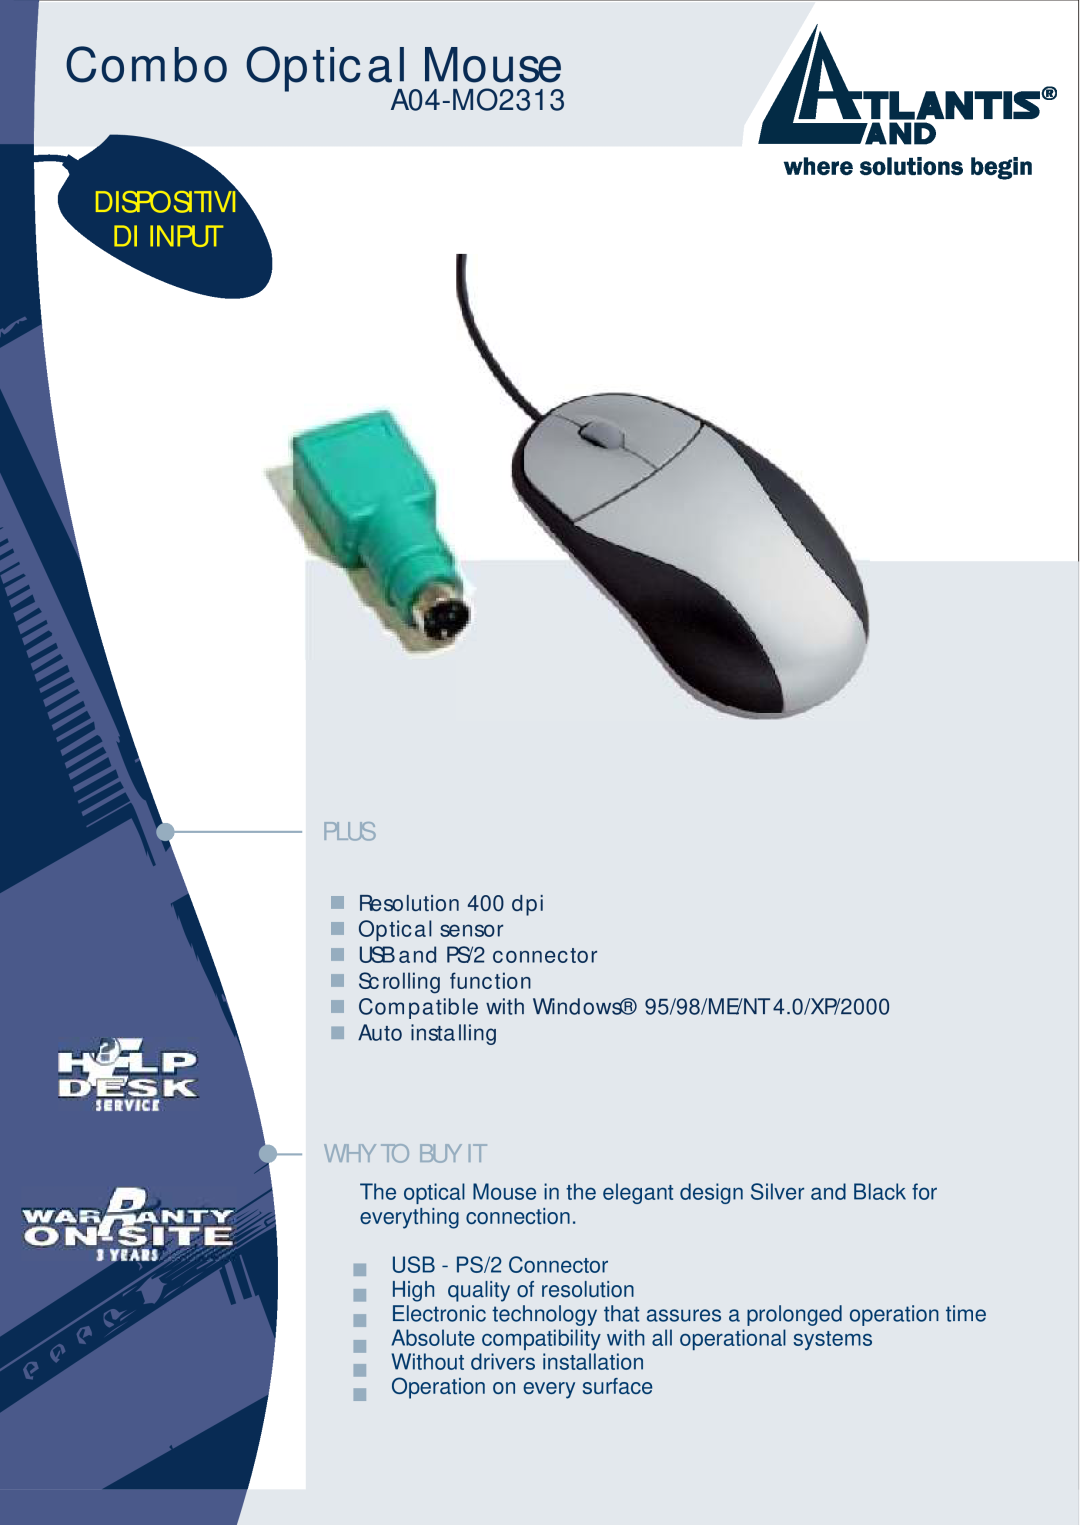 Atlantis Land A04-MO2313 manual Combo Optical Mouse, Dispositivi Di Input, Plus, Why To Buy It, Auto installing 